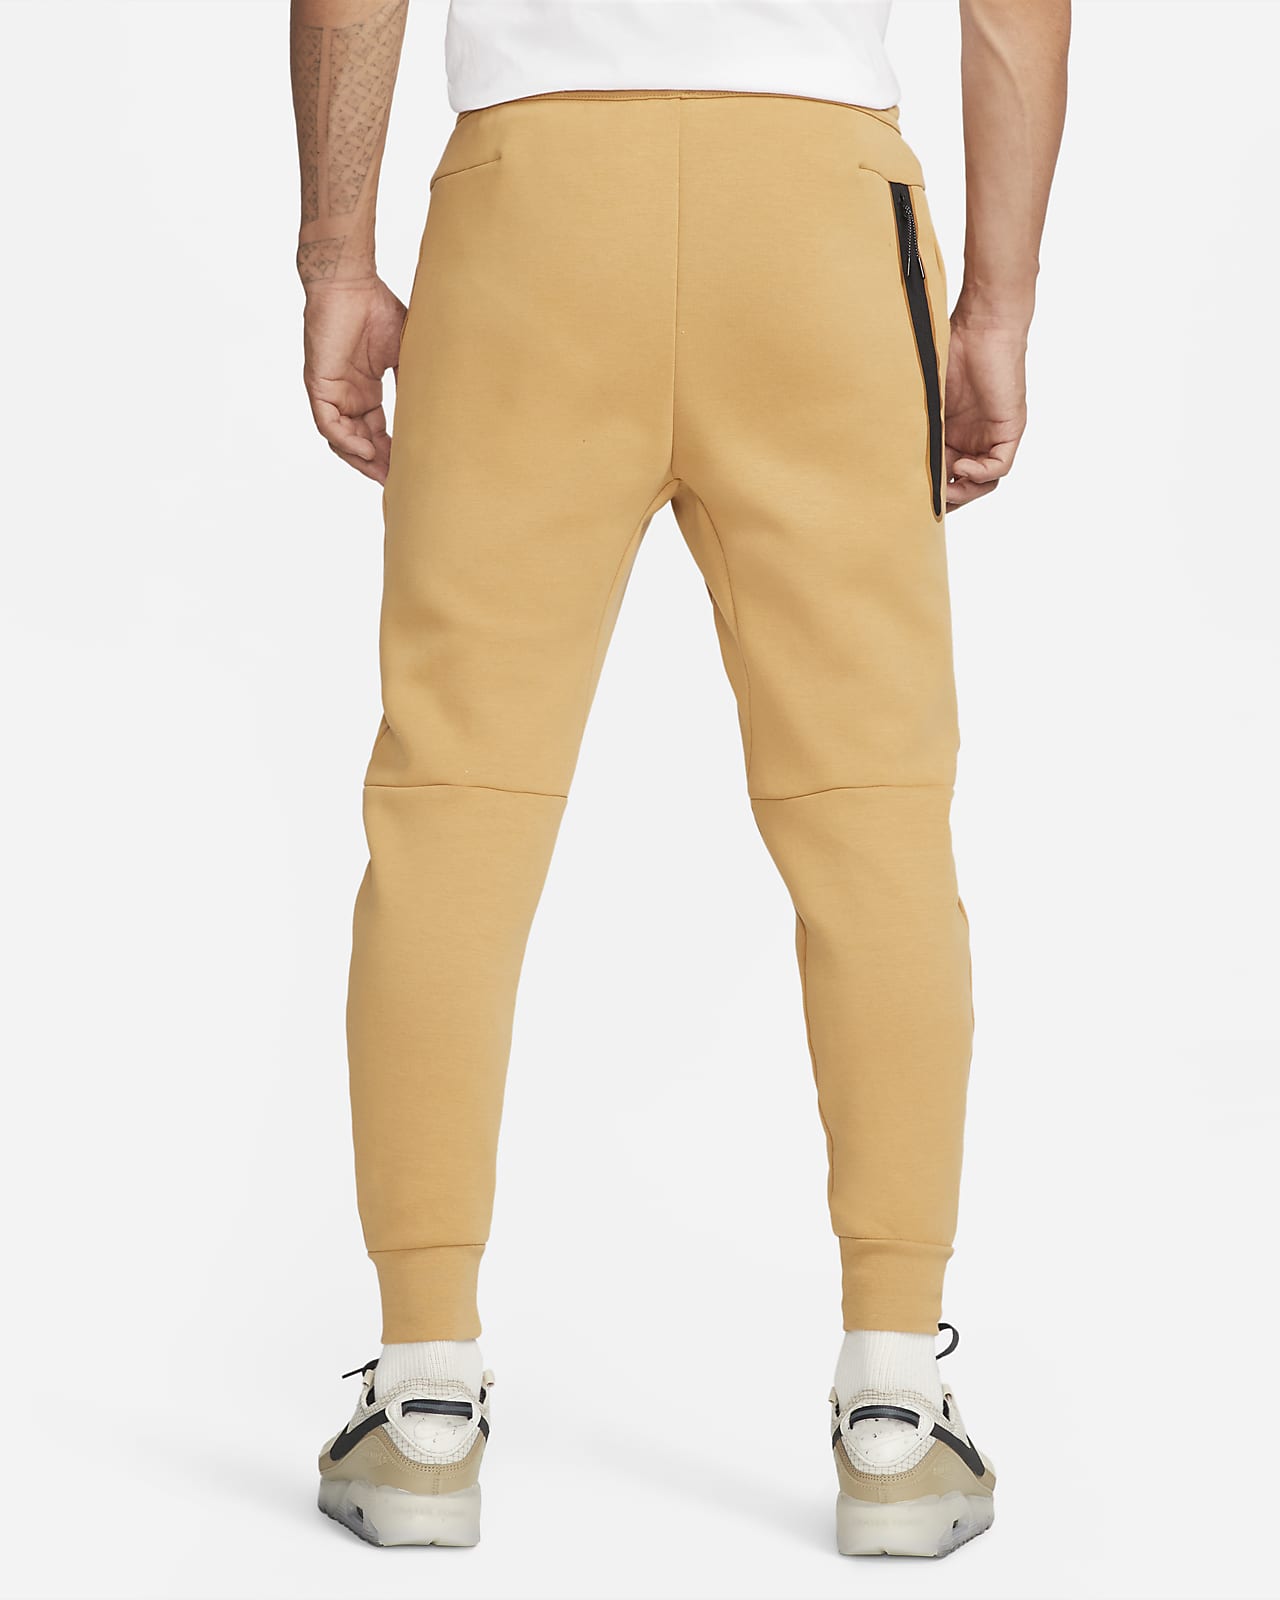 nike men's sweatpants with zipper pockets